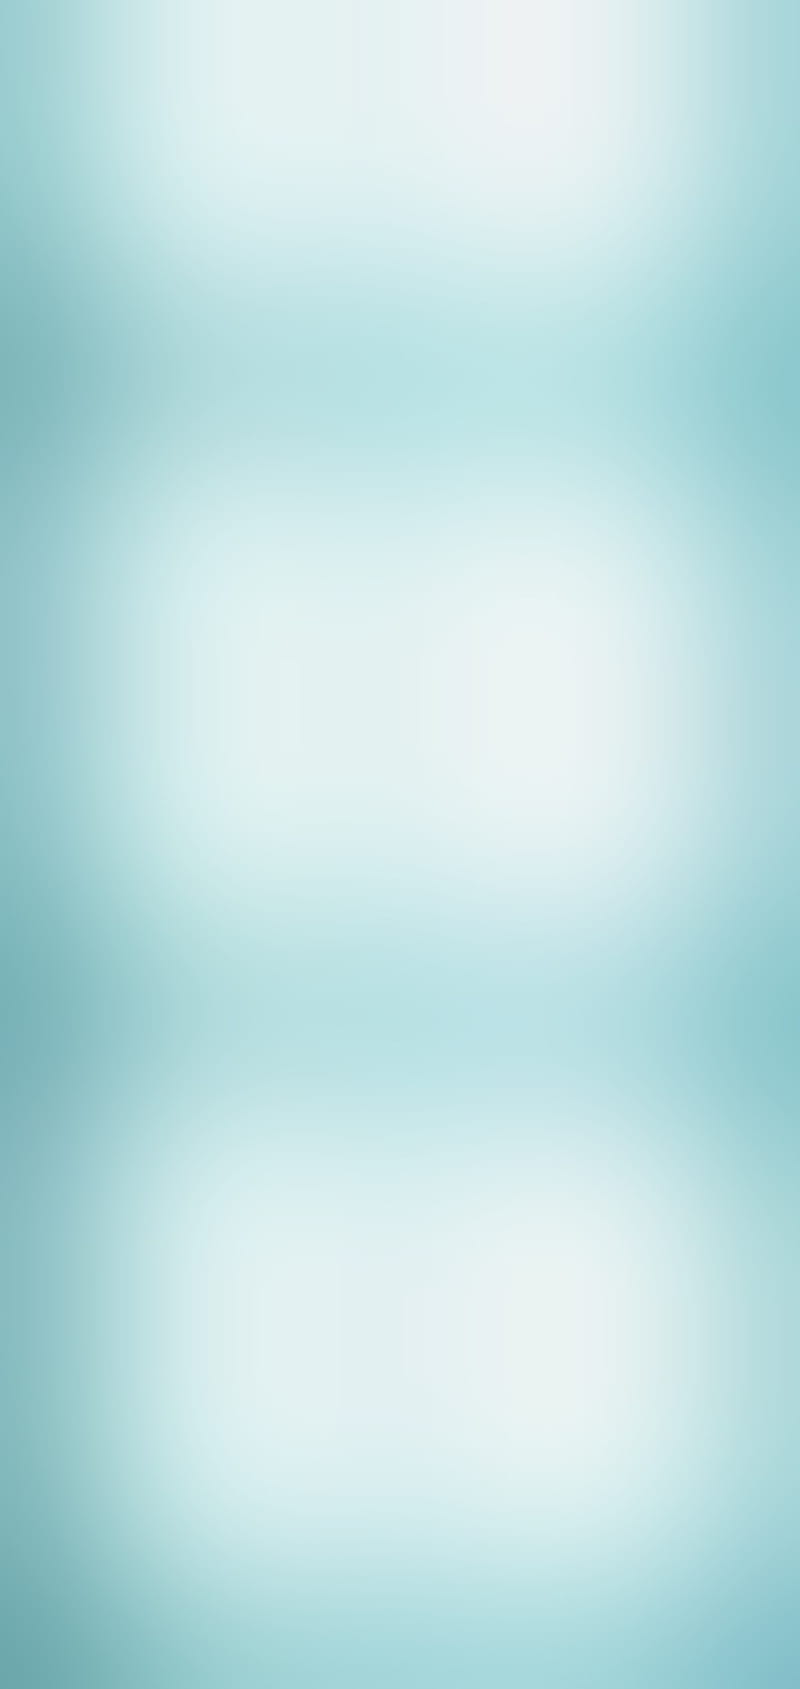 sj57-sky-blue-clear-white-gradation-blur-wallpaper